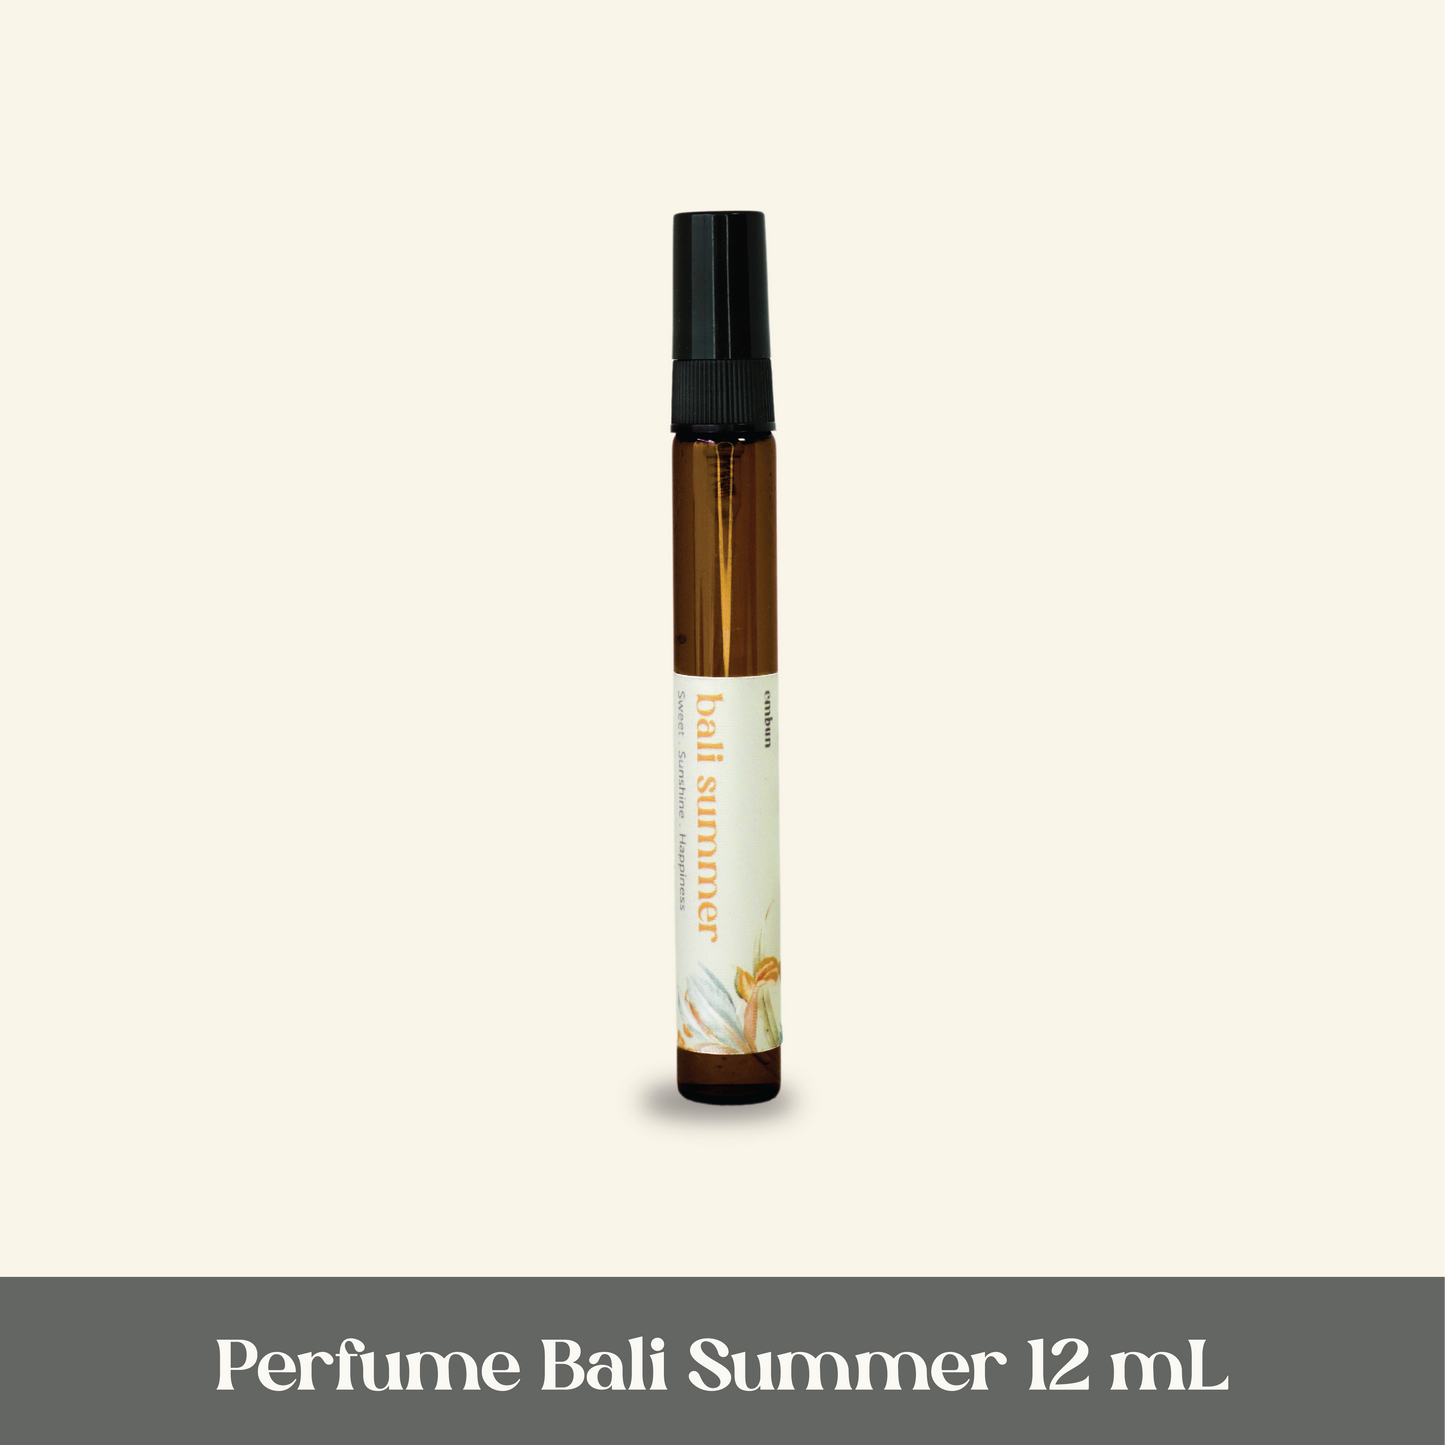 Perfume Bali Summer 12 ml